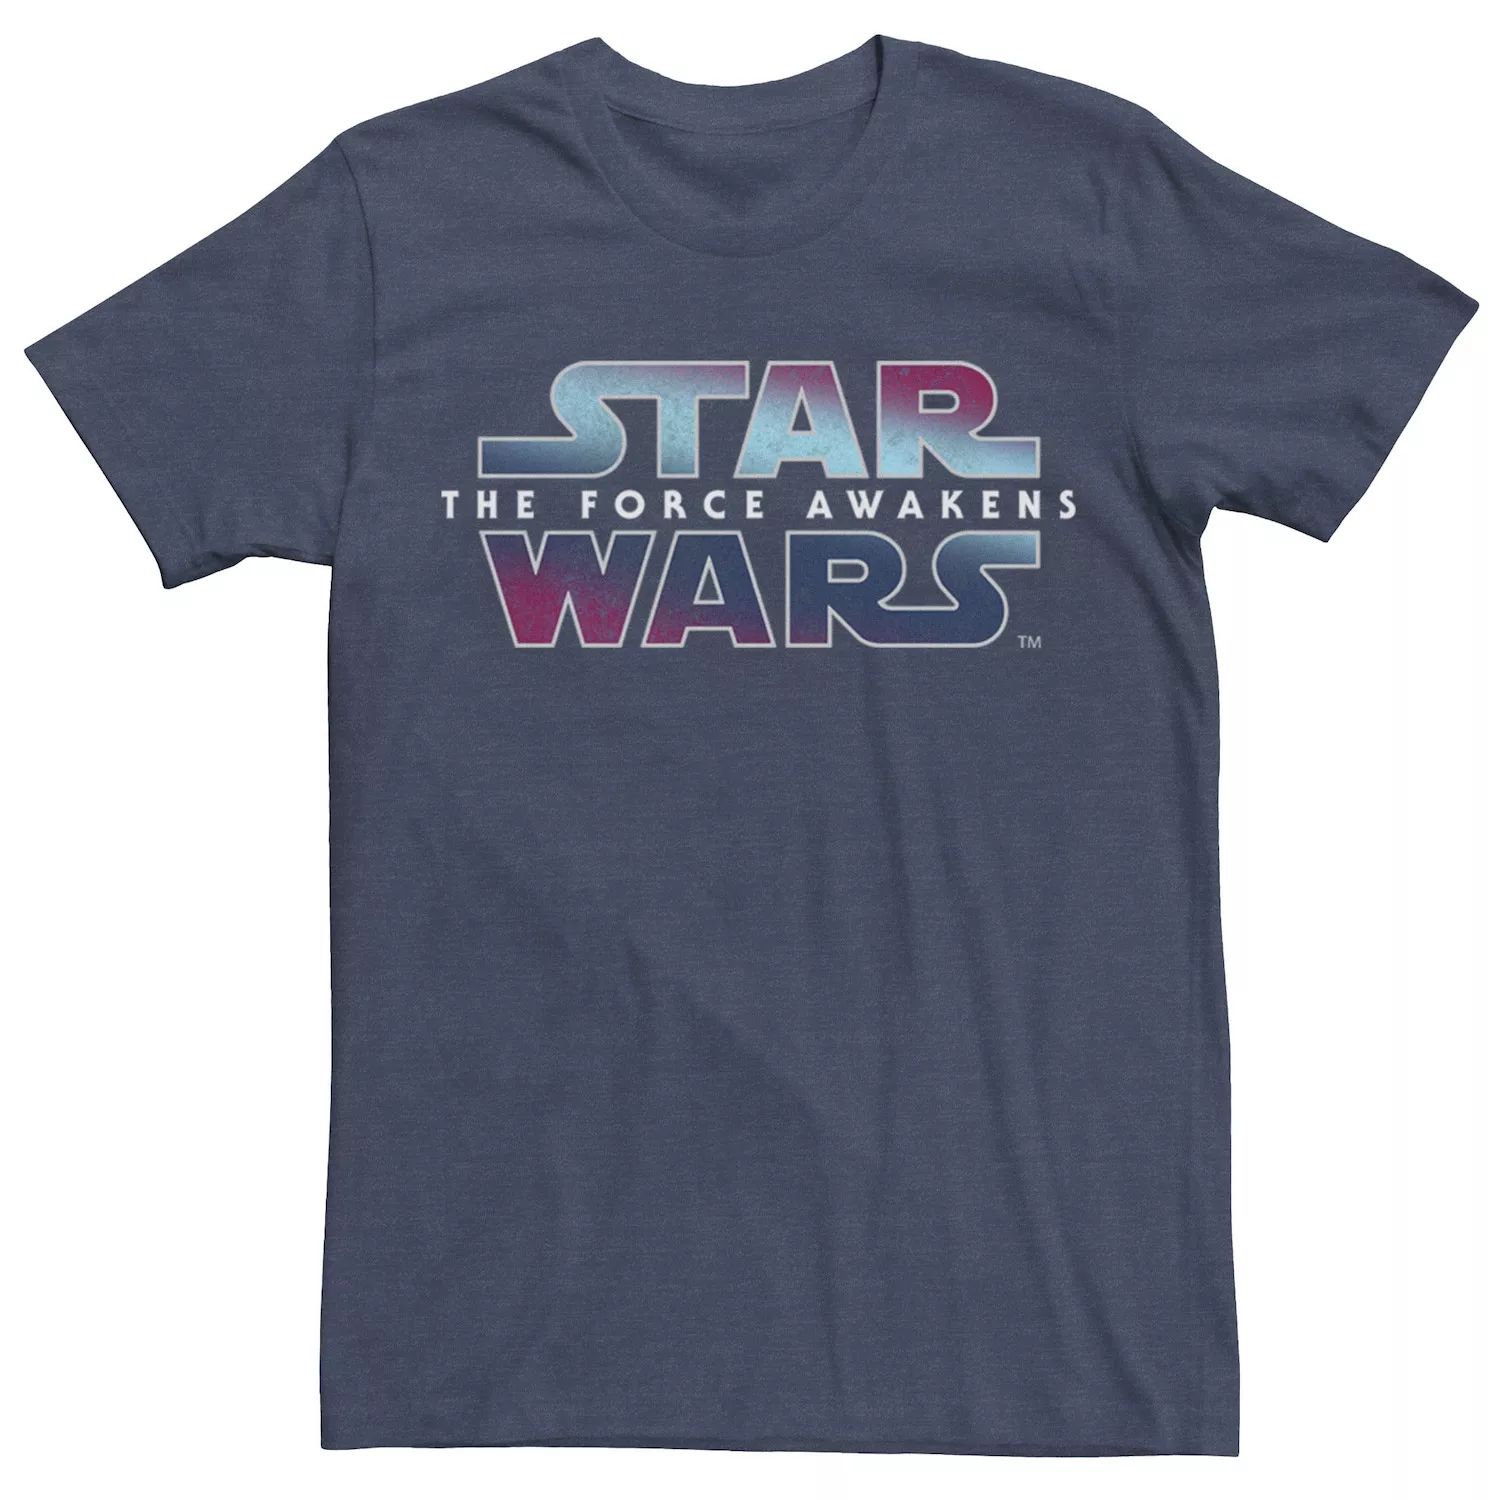 Мужская футболка с графическим логотипом Fade Star Wars